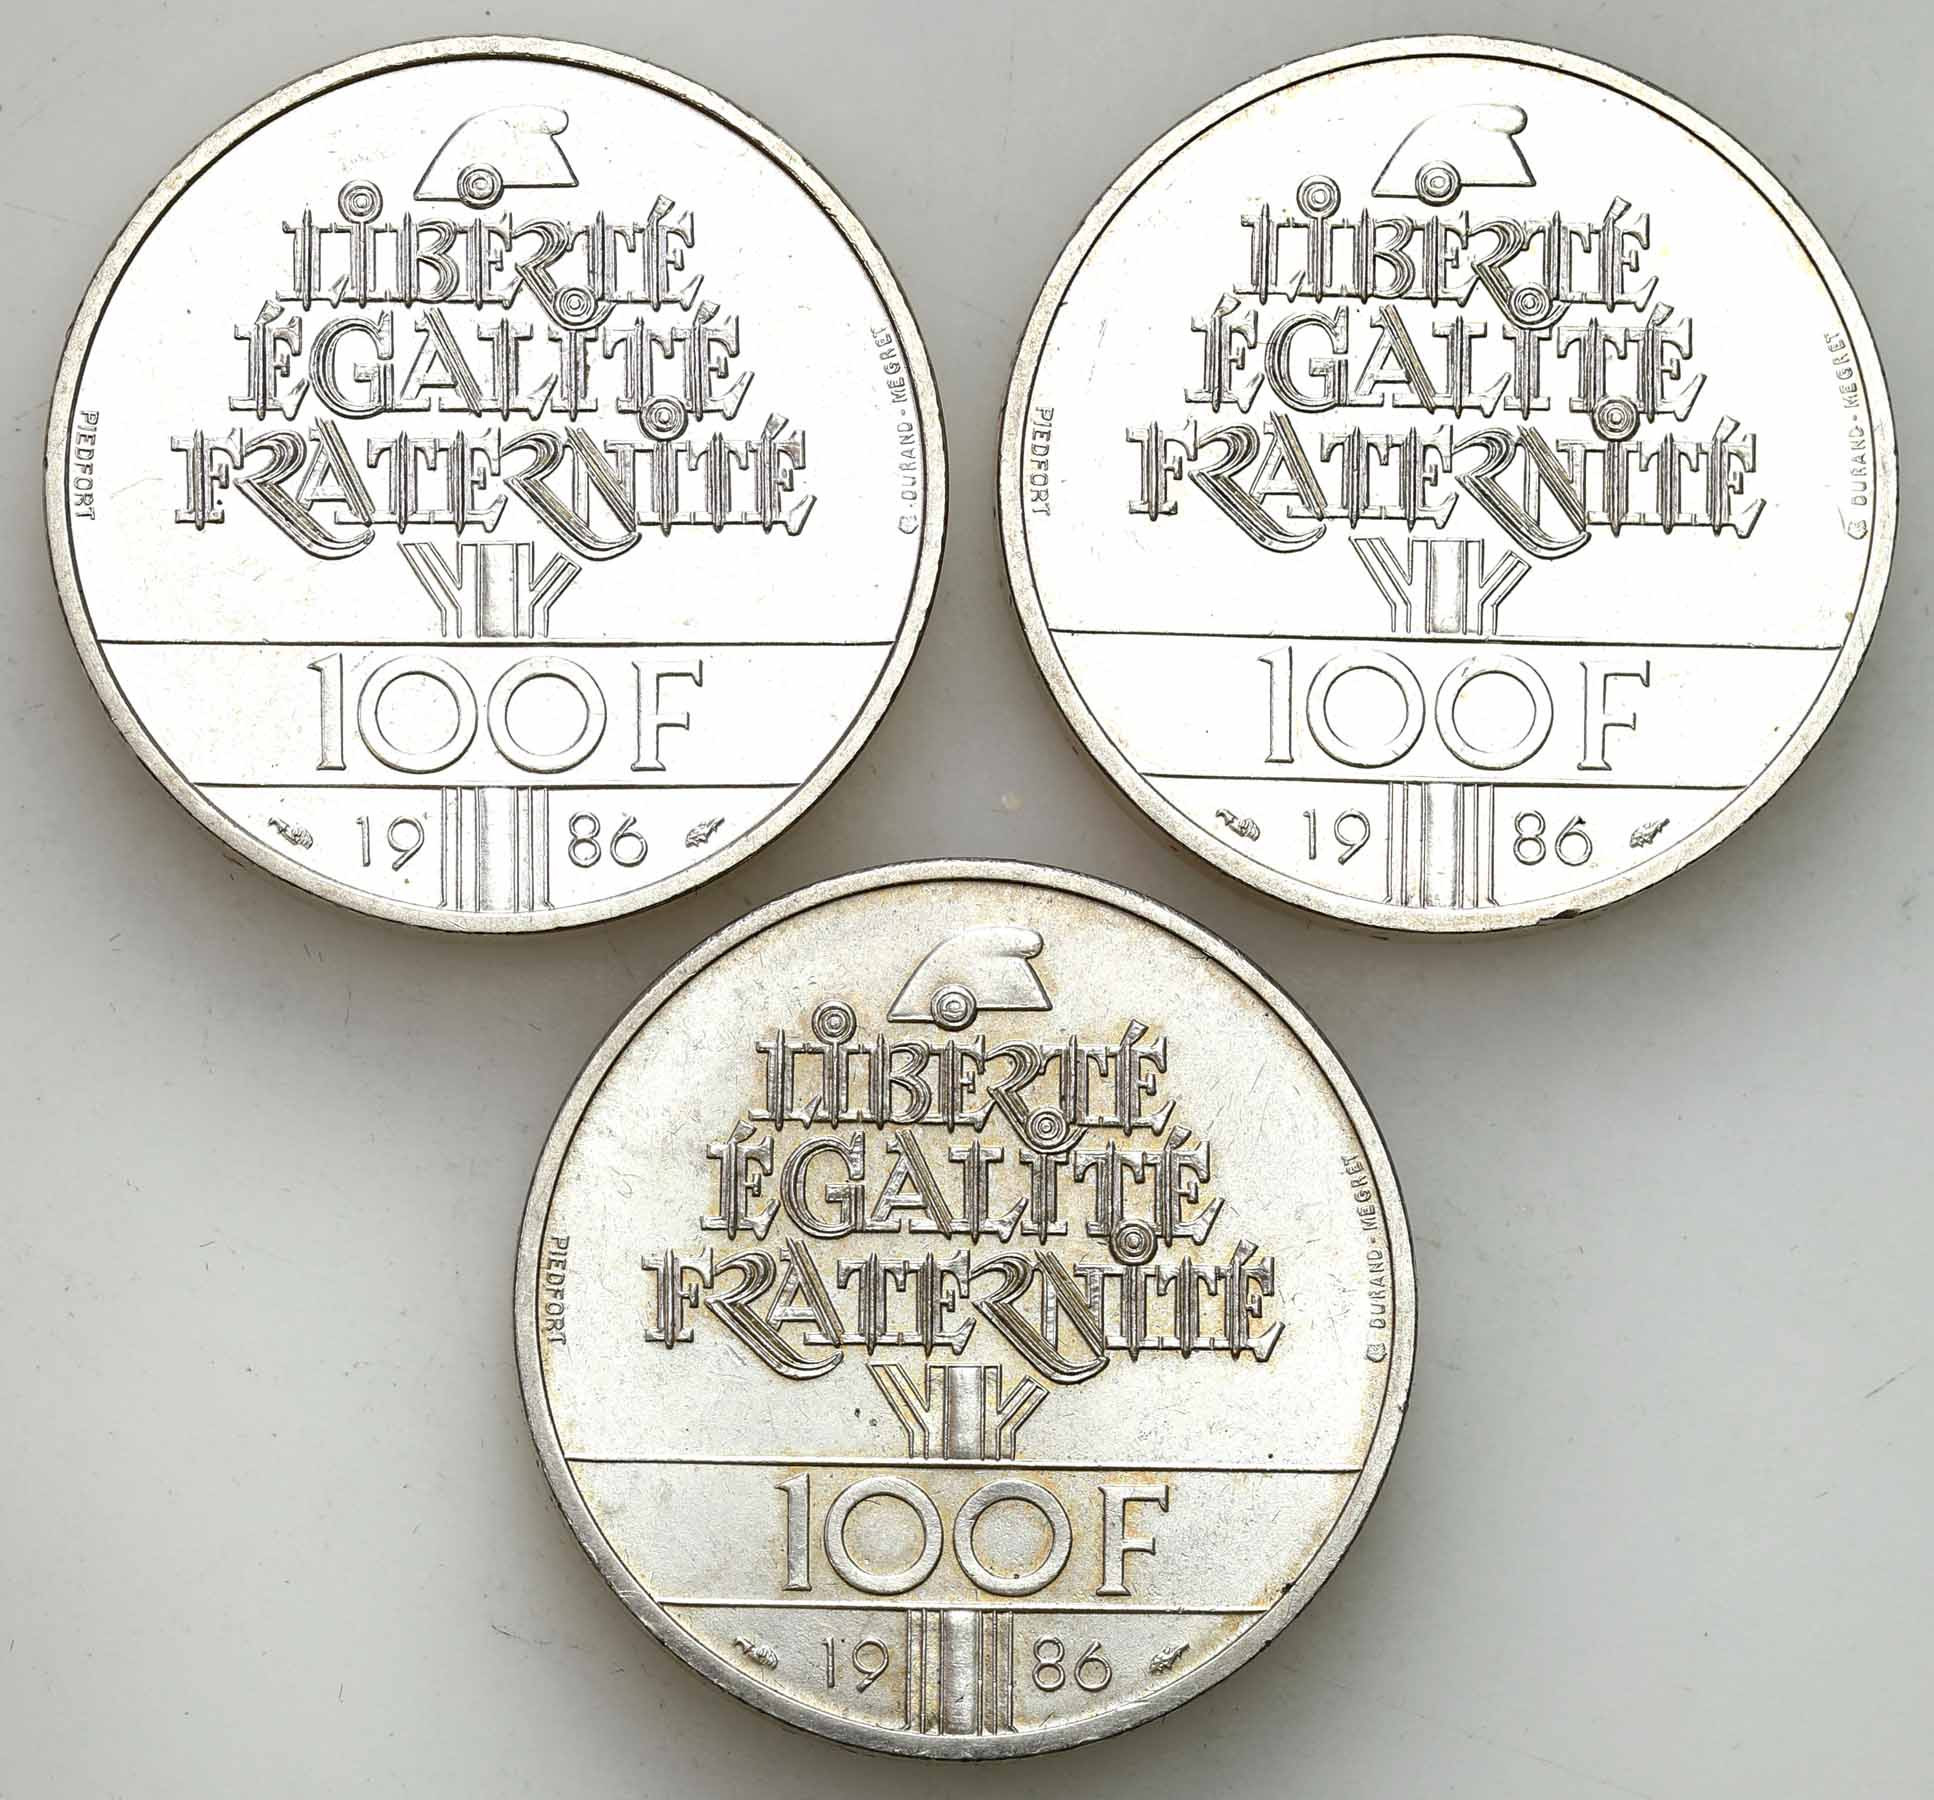 Francja. 100 franków 1986, Paryż, zestaw 3 sztuk - PIEDFORT